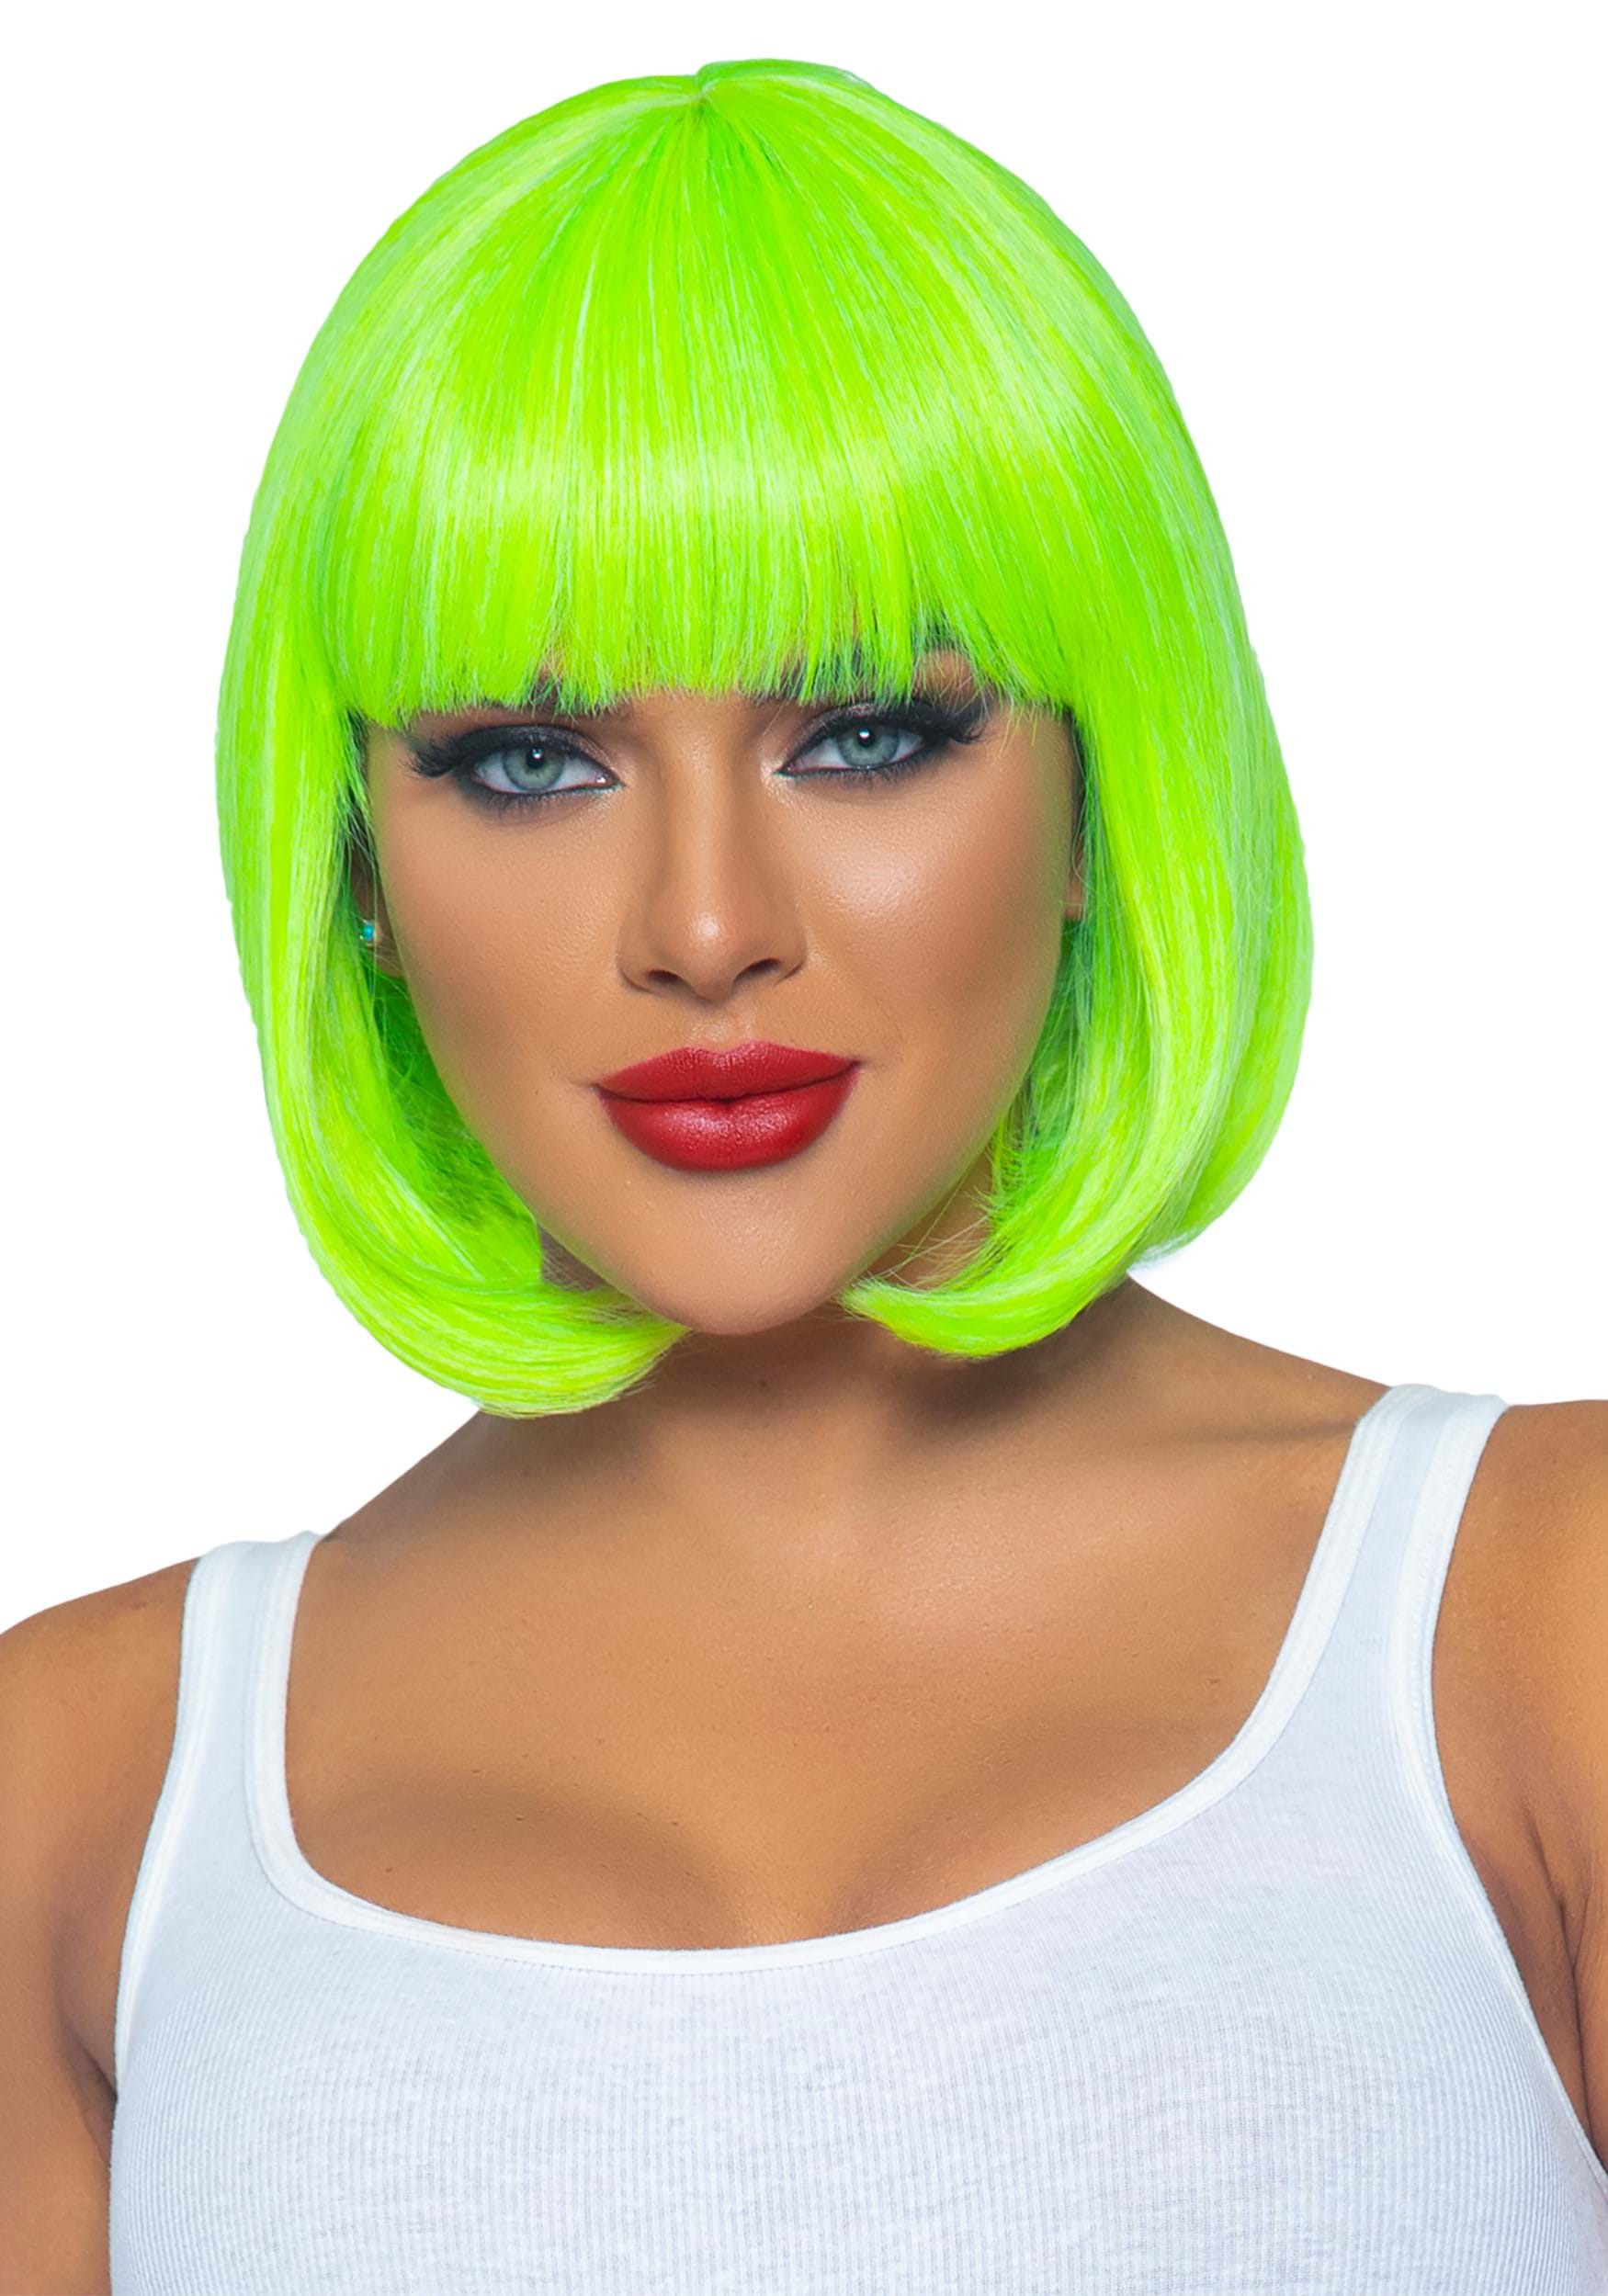 https://images.halloweencostumes.ca/products/82953/1-1/neon-green-short-bob-wig.jpg